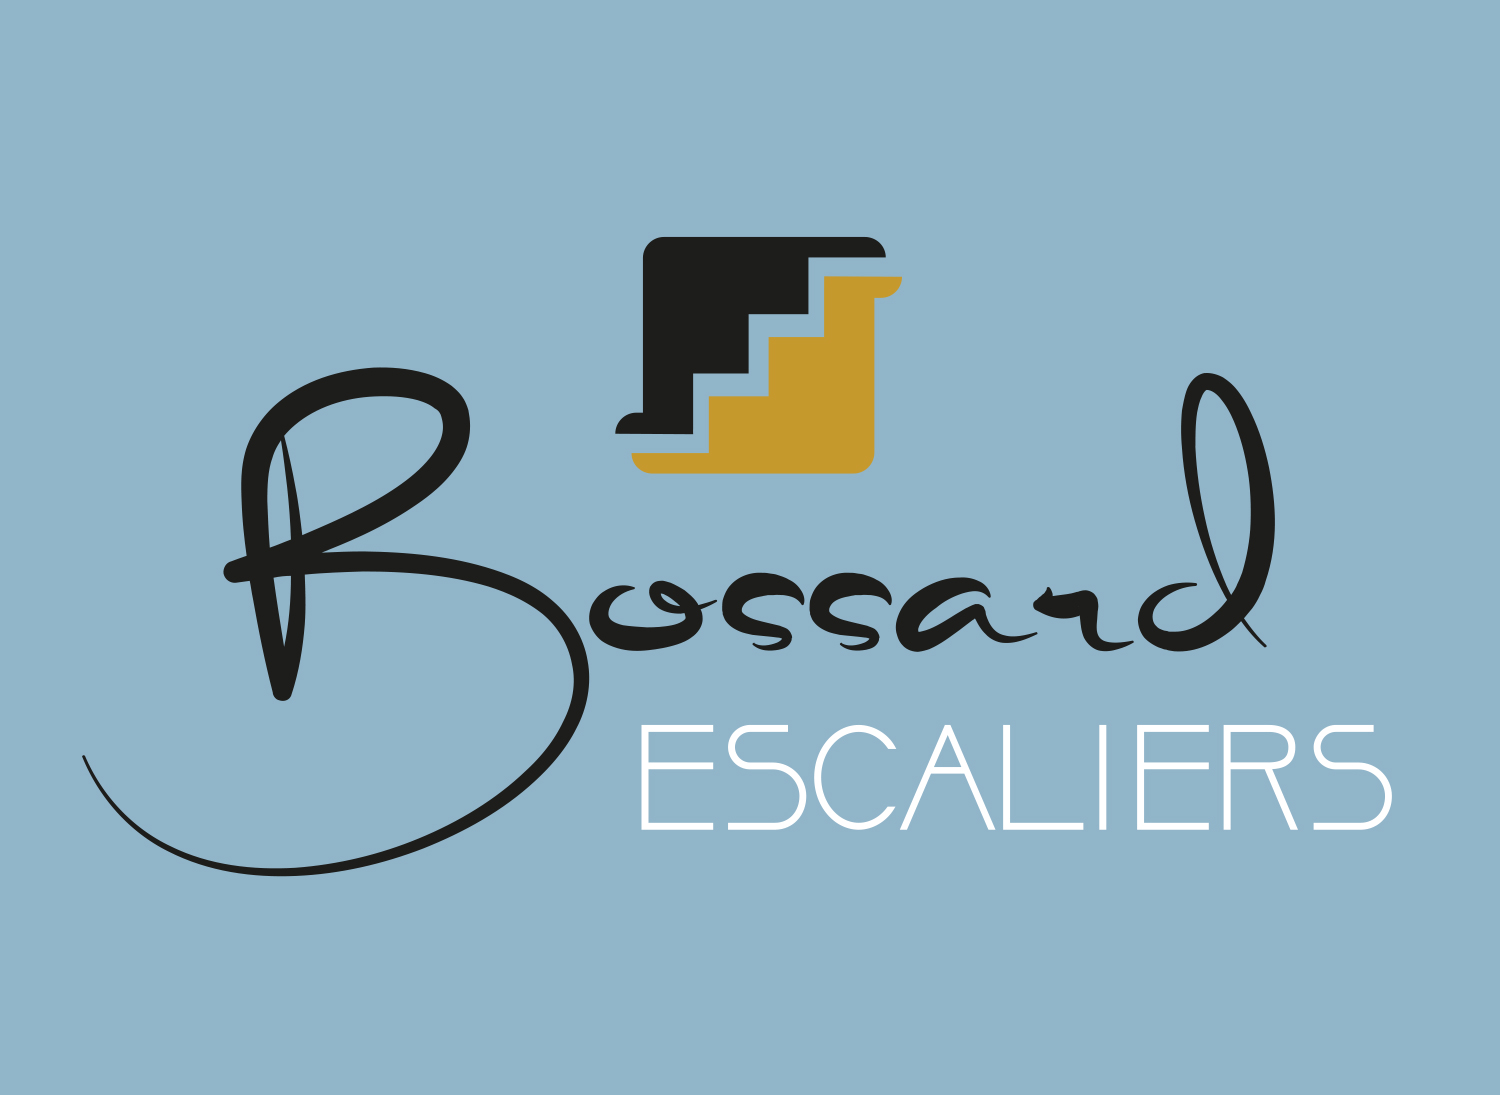 Bossard Escaliers- Logo